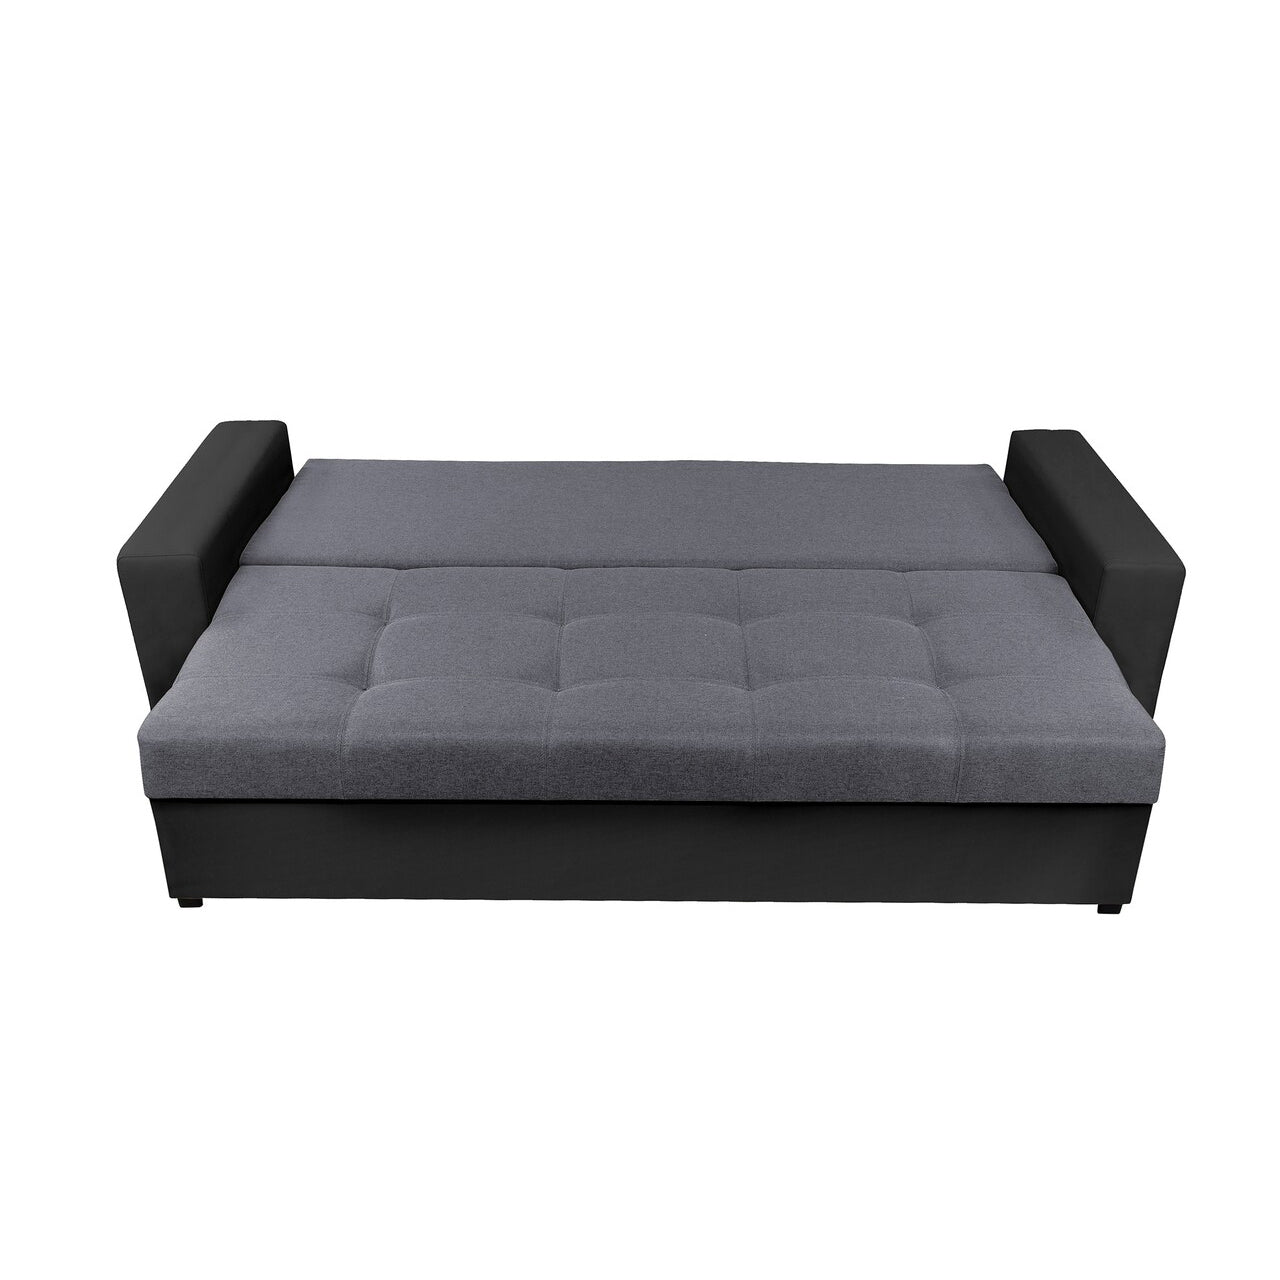 Beech wood sofa bed 85×210 cm - multiple colors - DECO227